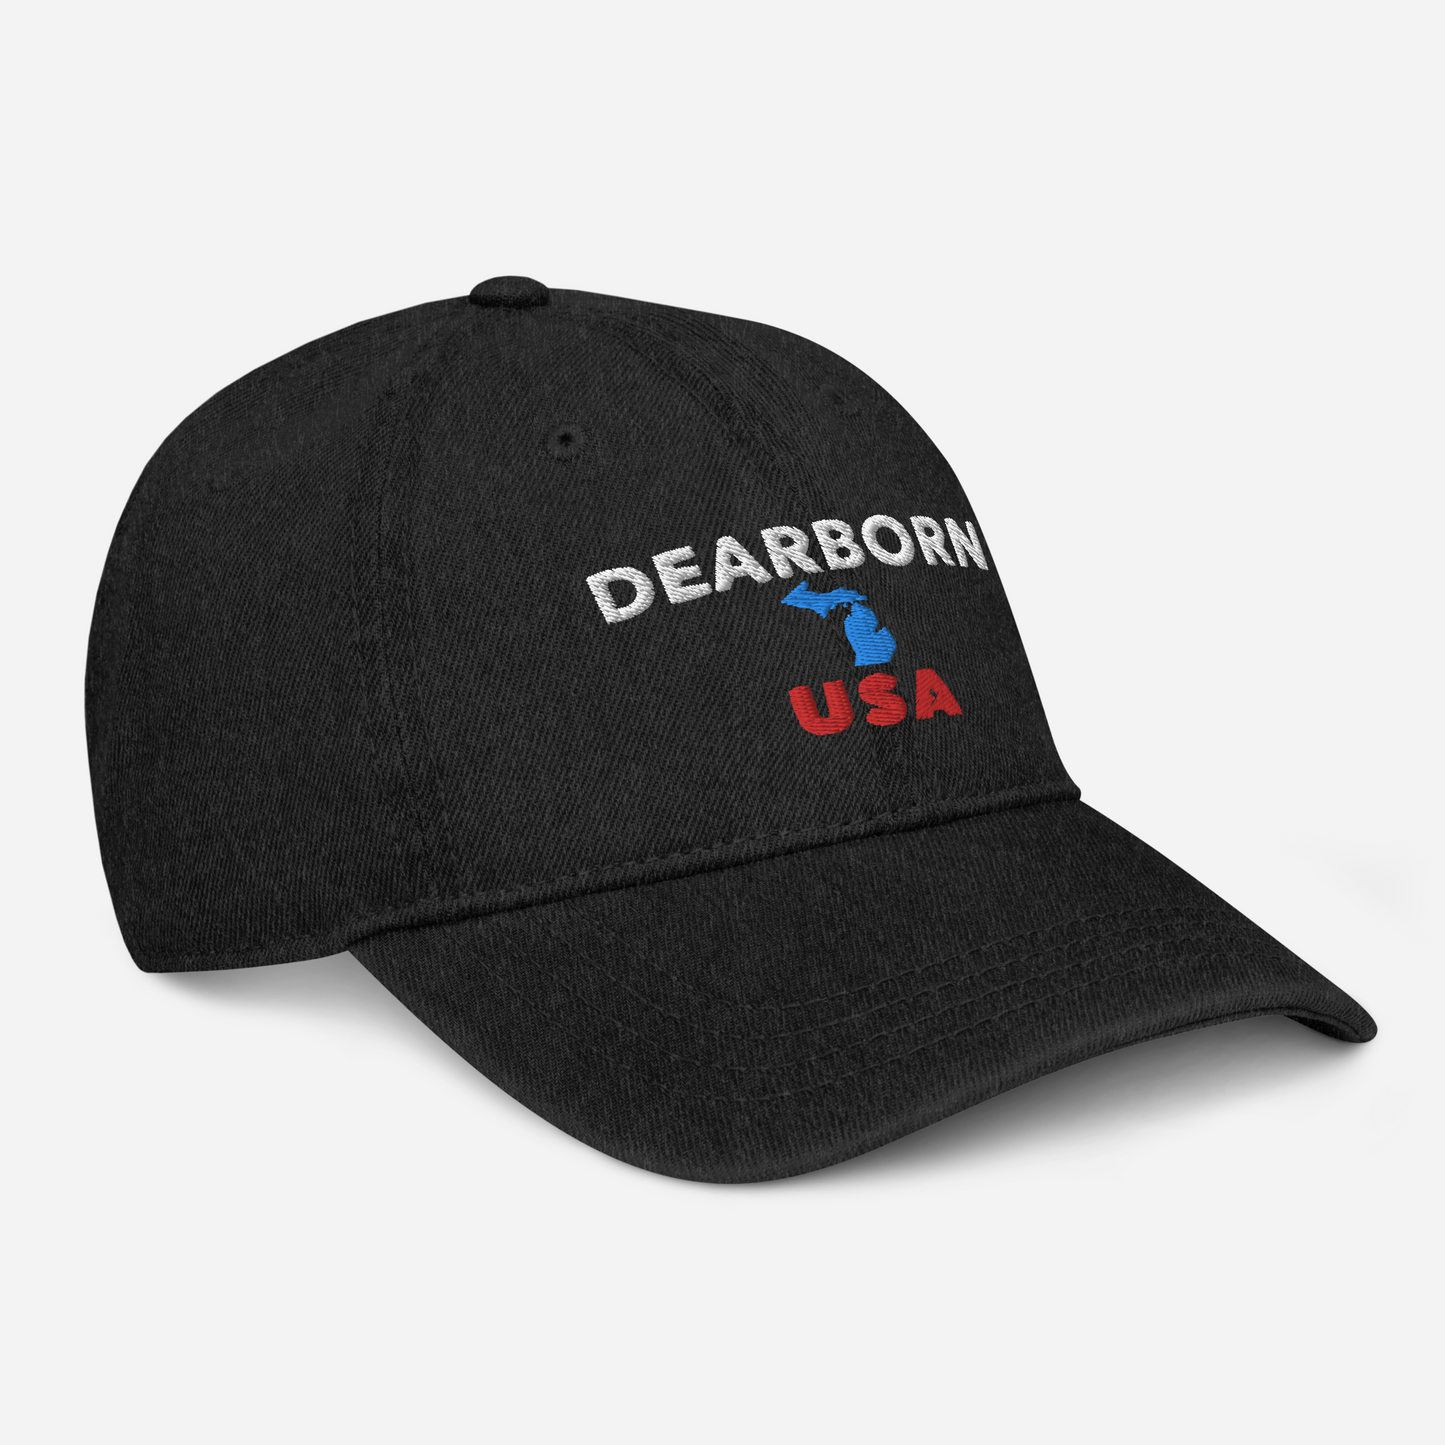 'Dearborn USA' Denim Baseball Cap (w/ Michigan Outline)